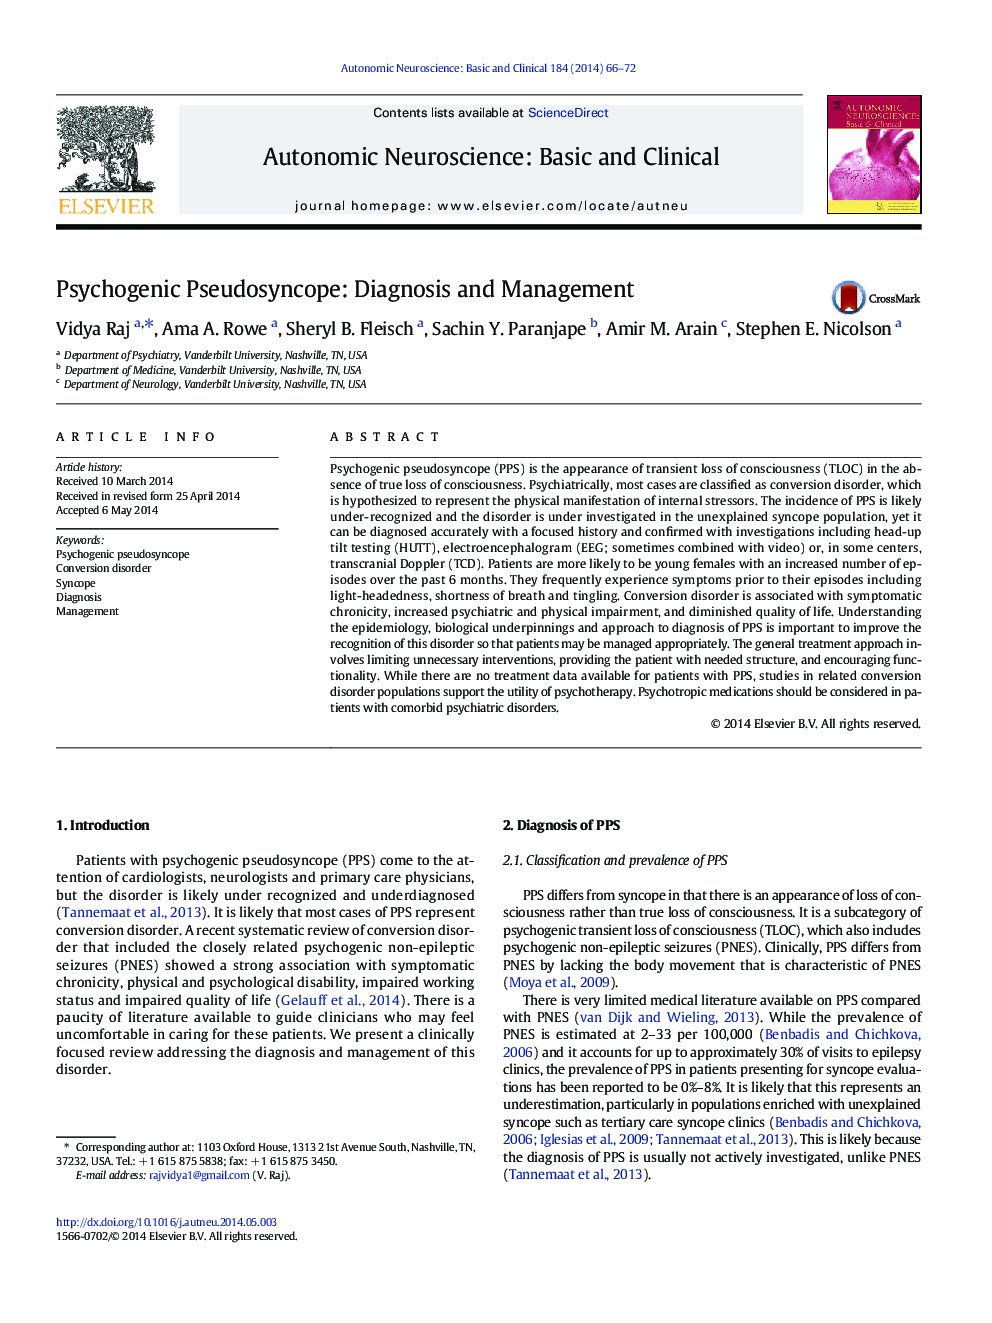 Psychogenic Pseudosyncope: Diagnosis and Management